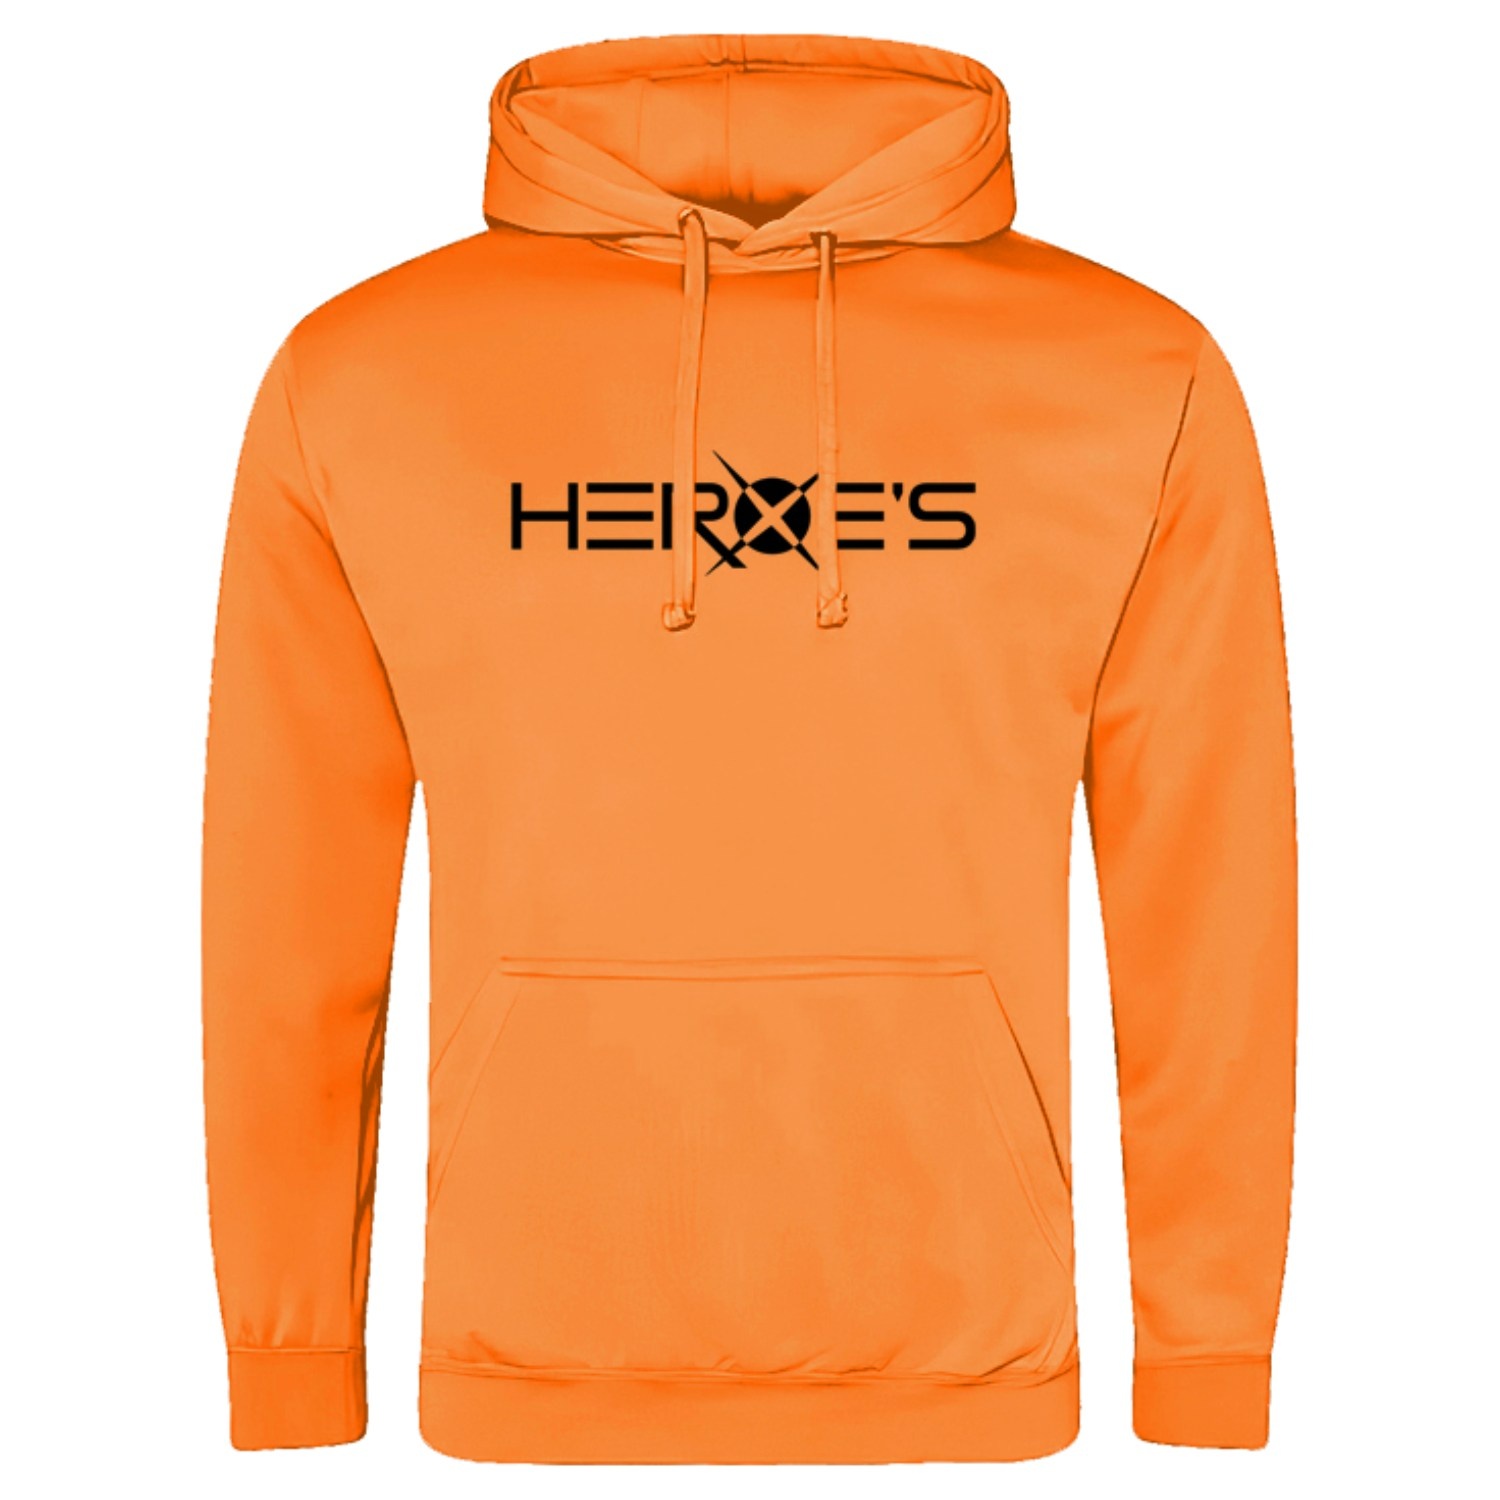 Heroe's Felpa Vibrancy Orange